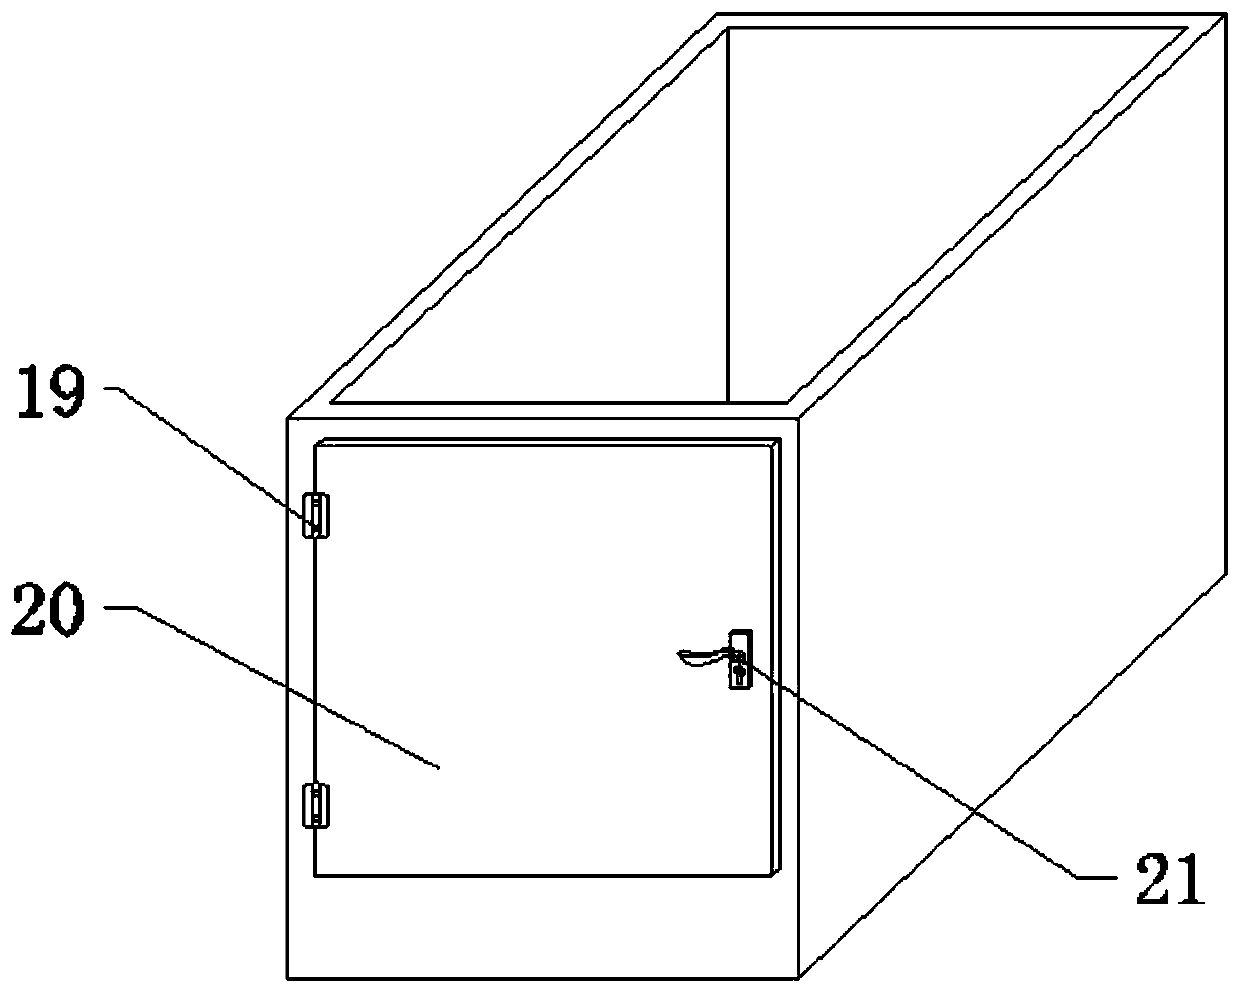 Temporary storage mechanism of circuit board film coating machine